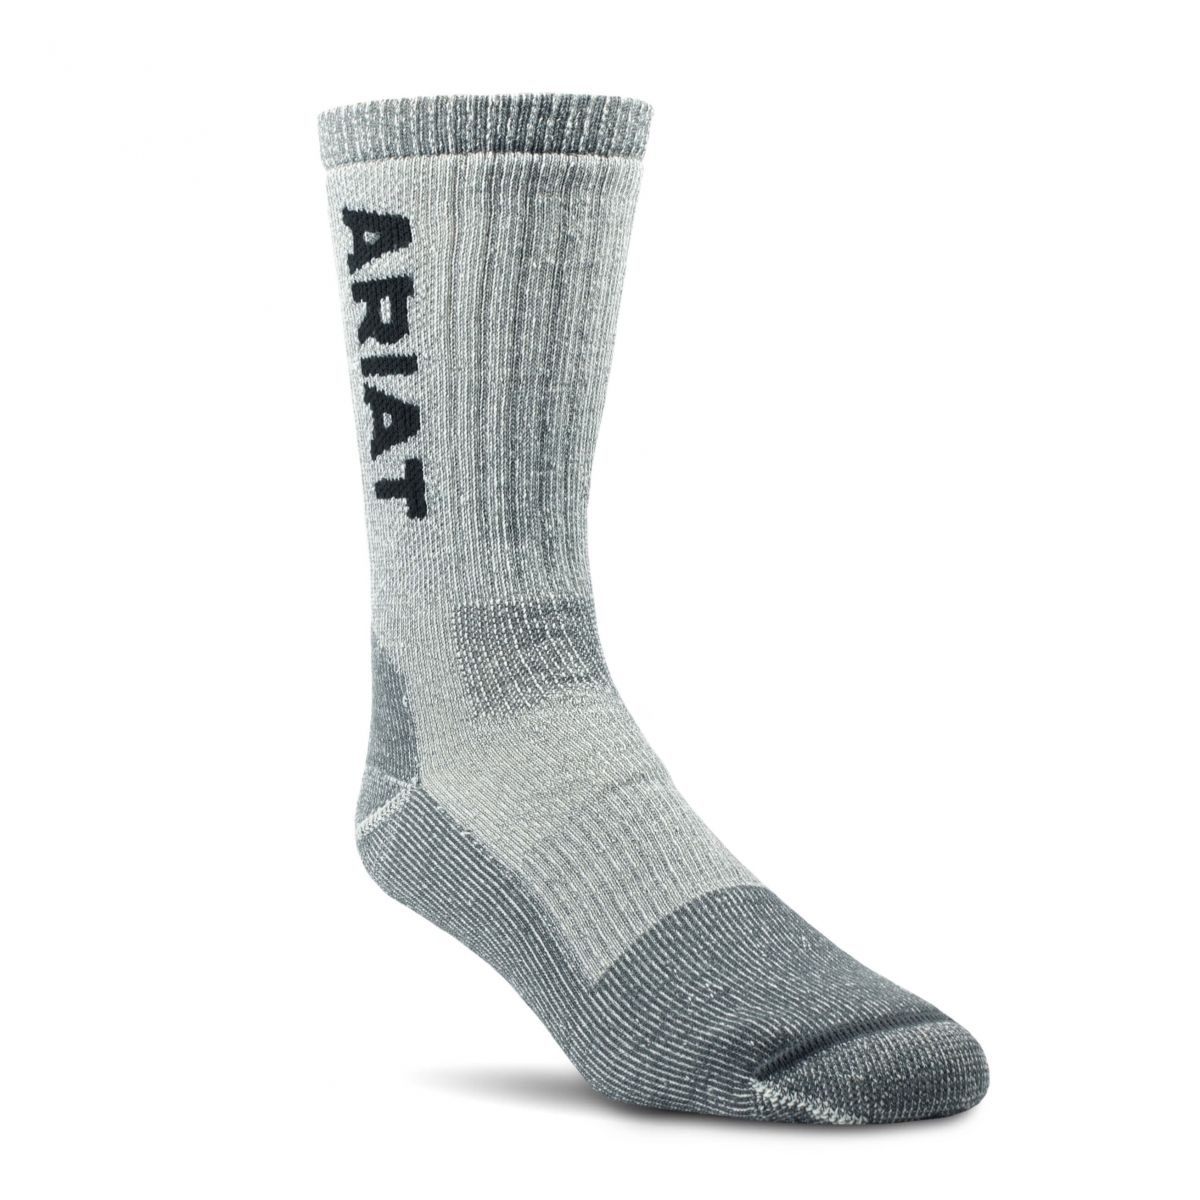 ARIAT Unisex Midweight Merino Wool Blend Steel Toe Work Socks Grey - AR2187-050 Grey - Grey, Large